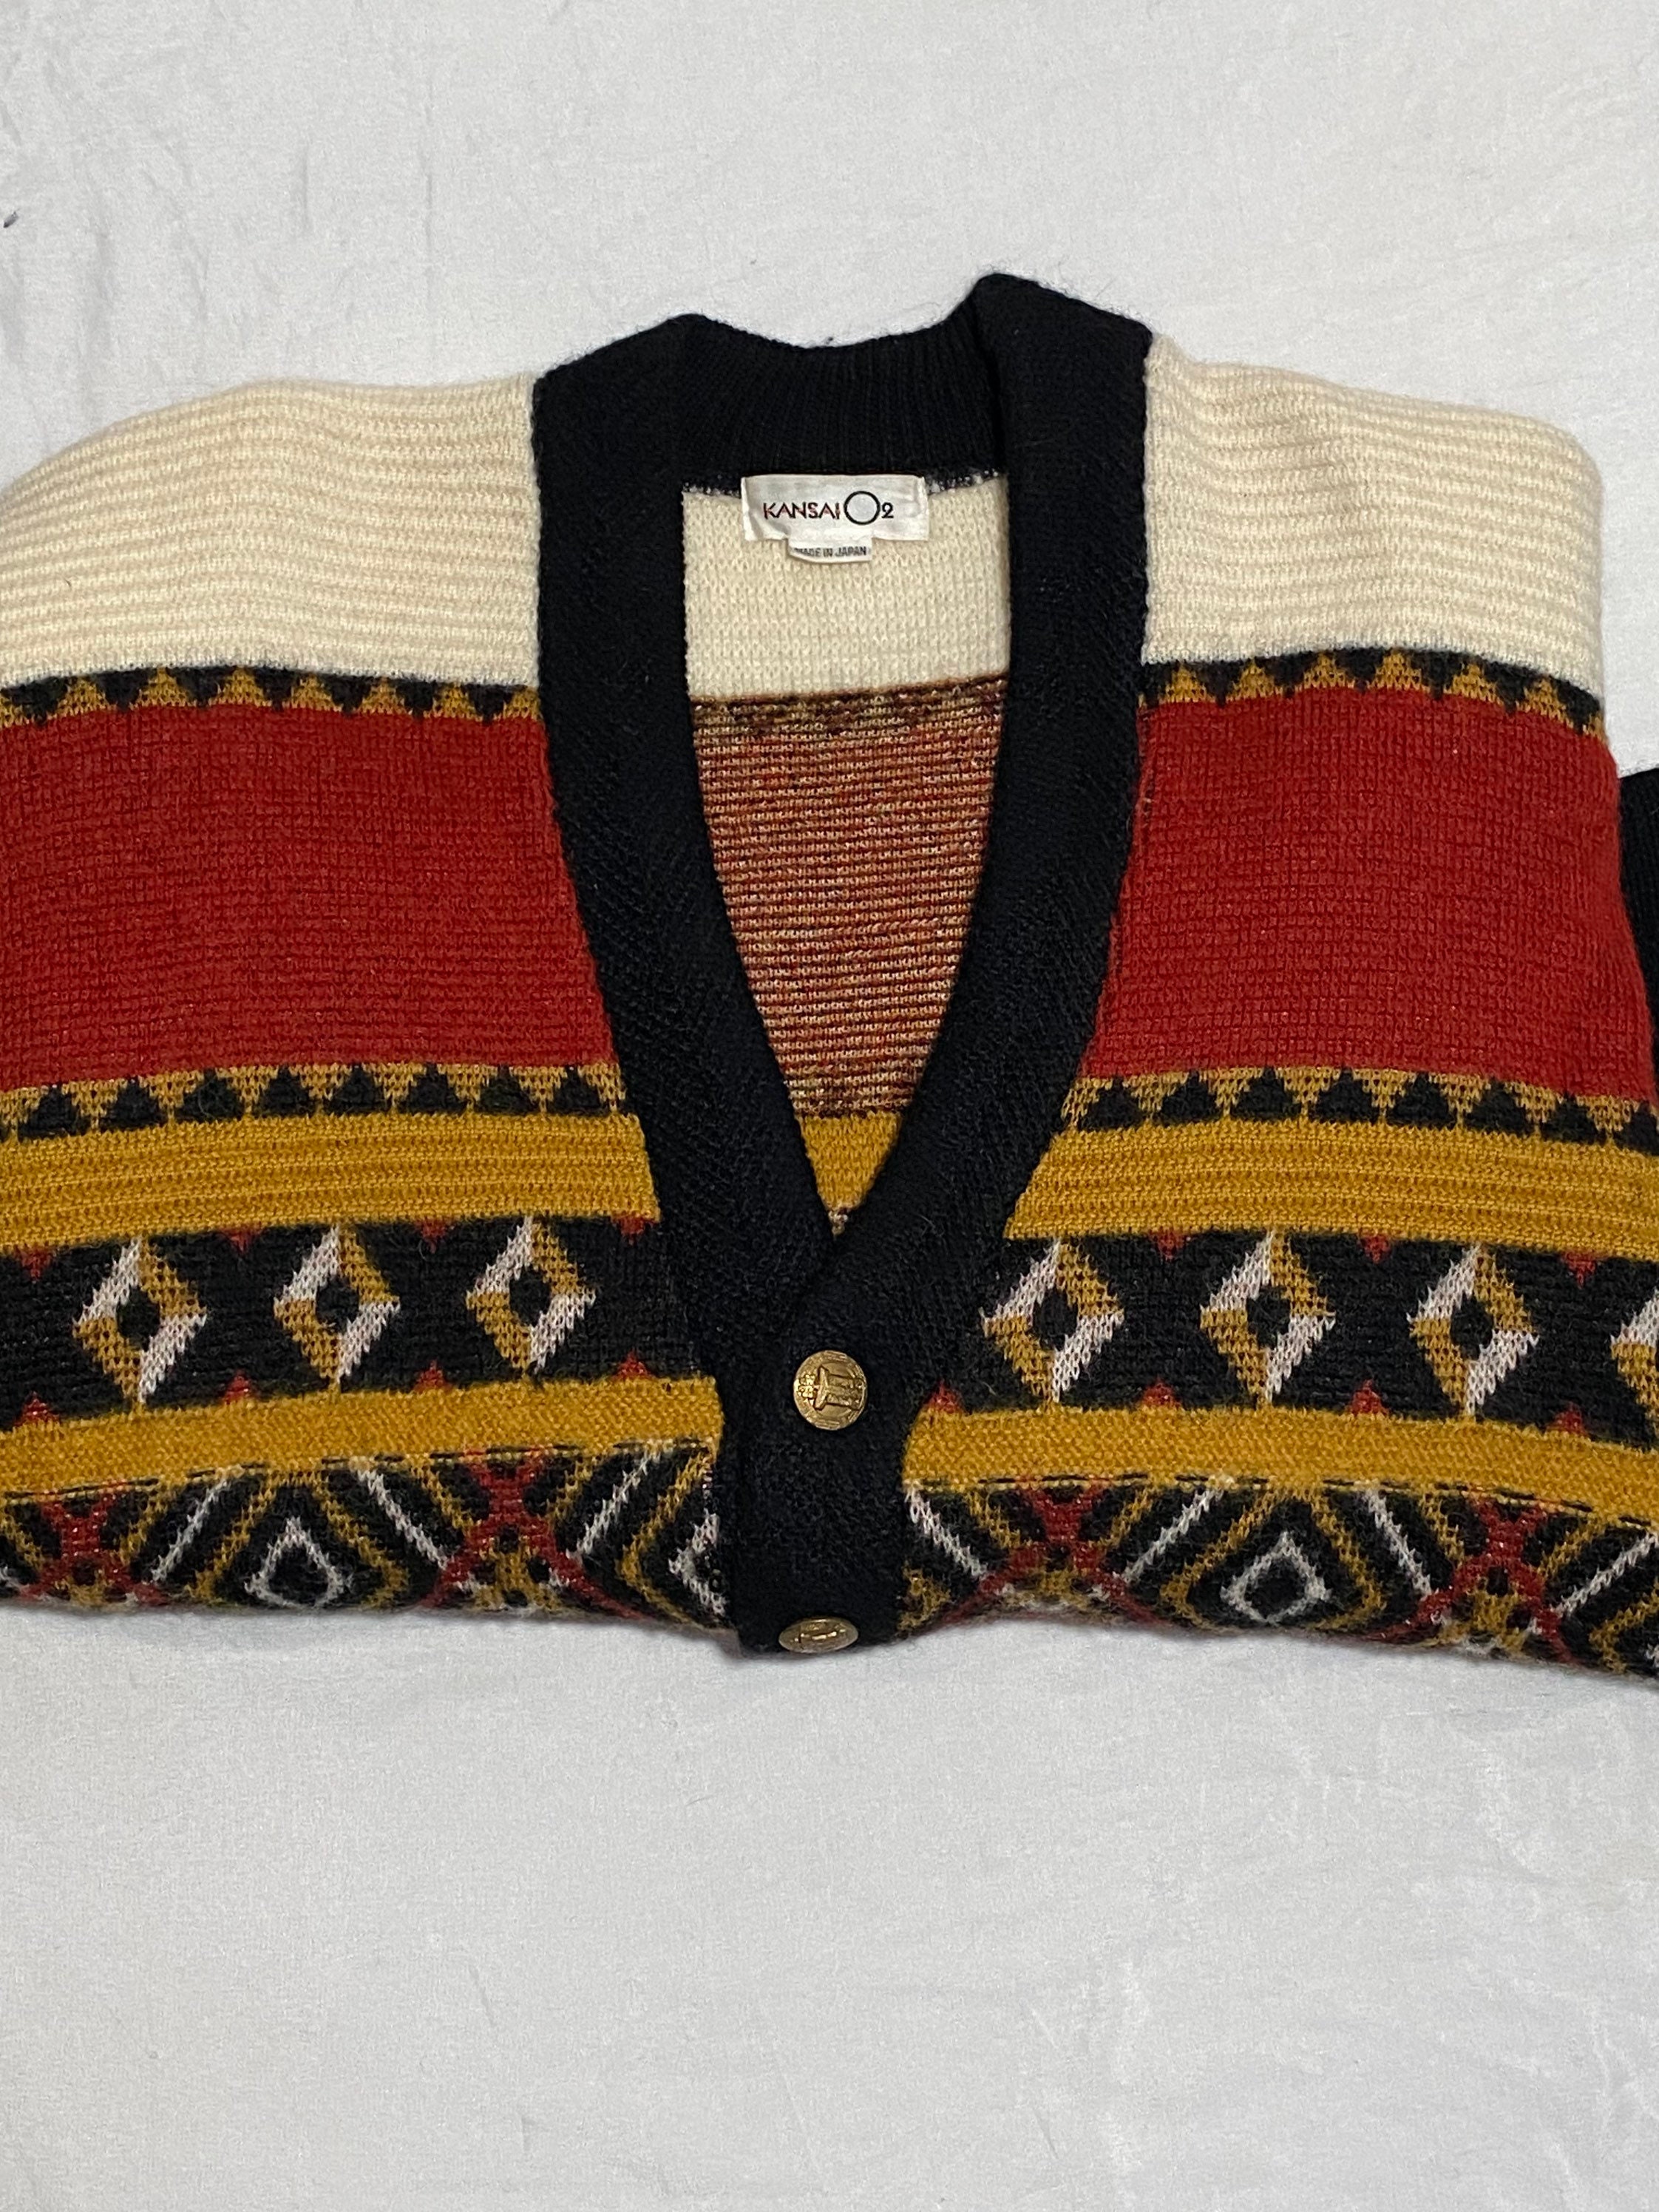 Vintage 80's KANSAI YAMAMOTO Bird Sweater at Rice and Beans Vintage